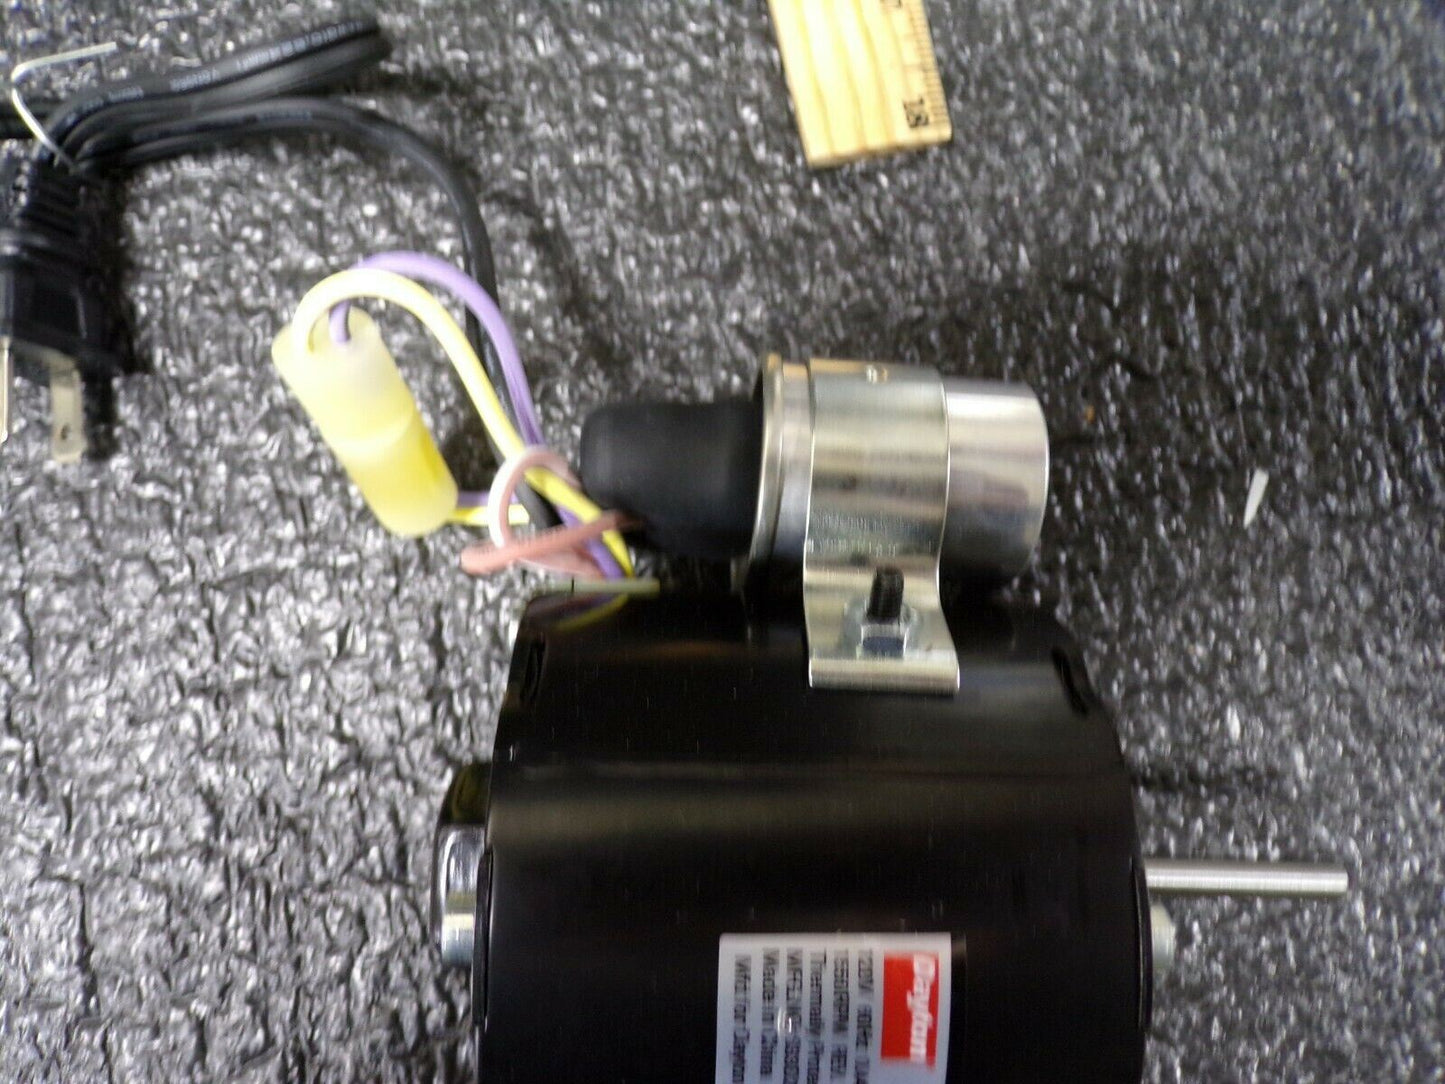 Dayton 20HN82 HVAC Fan Blower Motor 1/30HP 1550RPM 120 Voltage, (184122580807-WTA05)